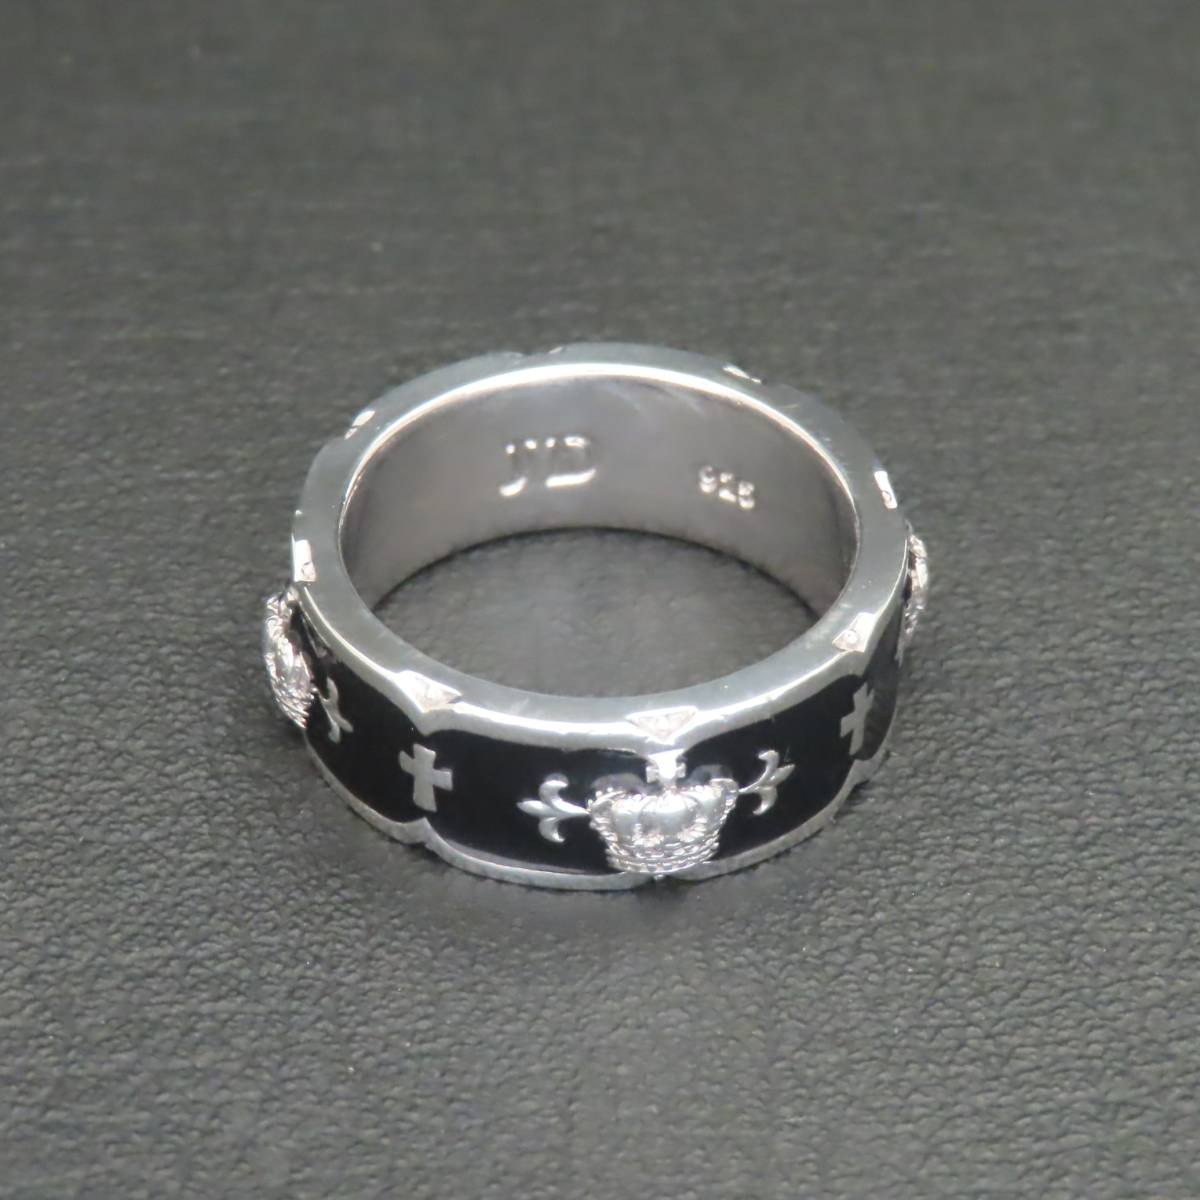  как новый прекрасный товар JUSTIN DAVIS BEAUTY&MADNESS RING Justin Davis кольцо кольцо Crown ..15 номер 7.9g SRJ795